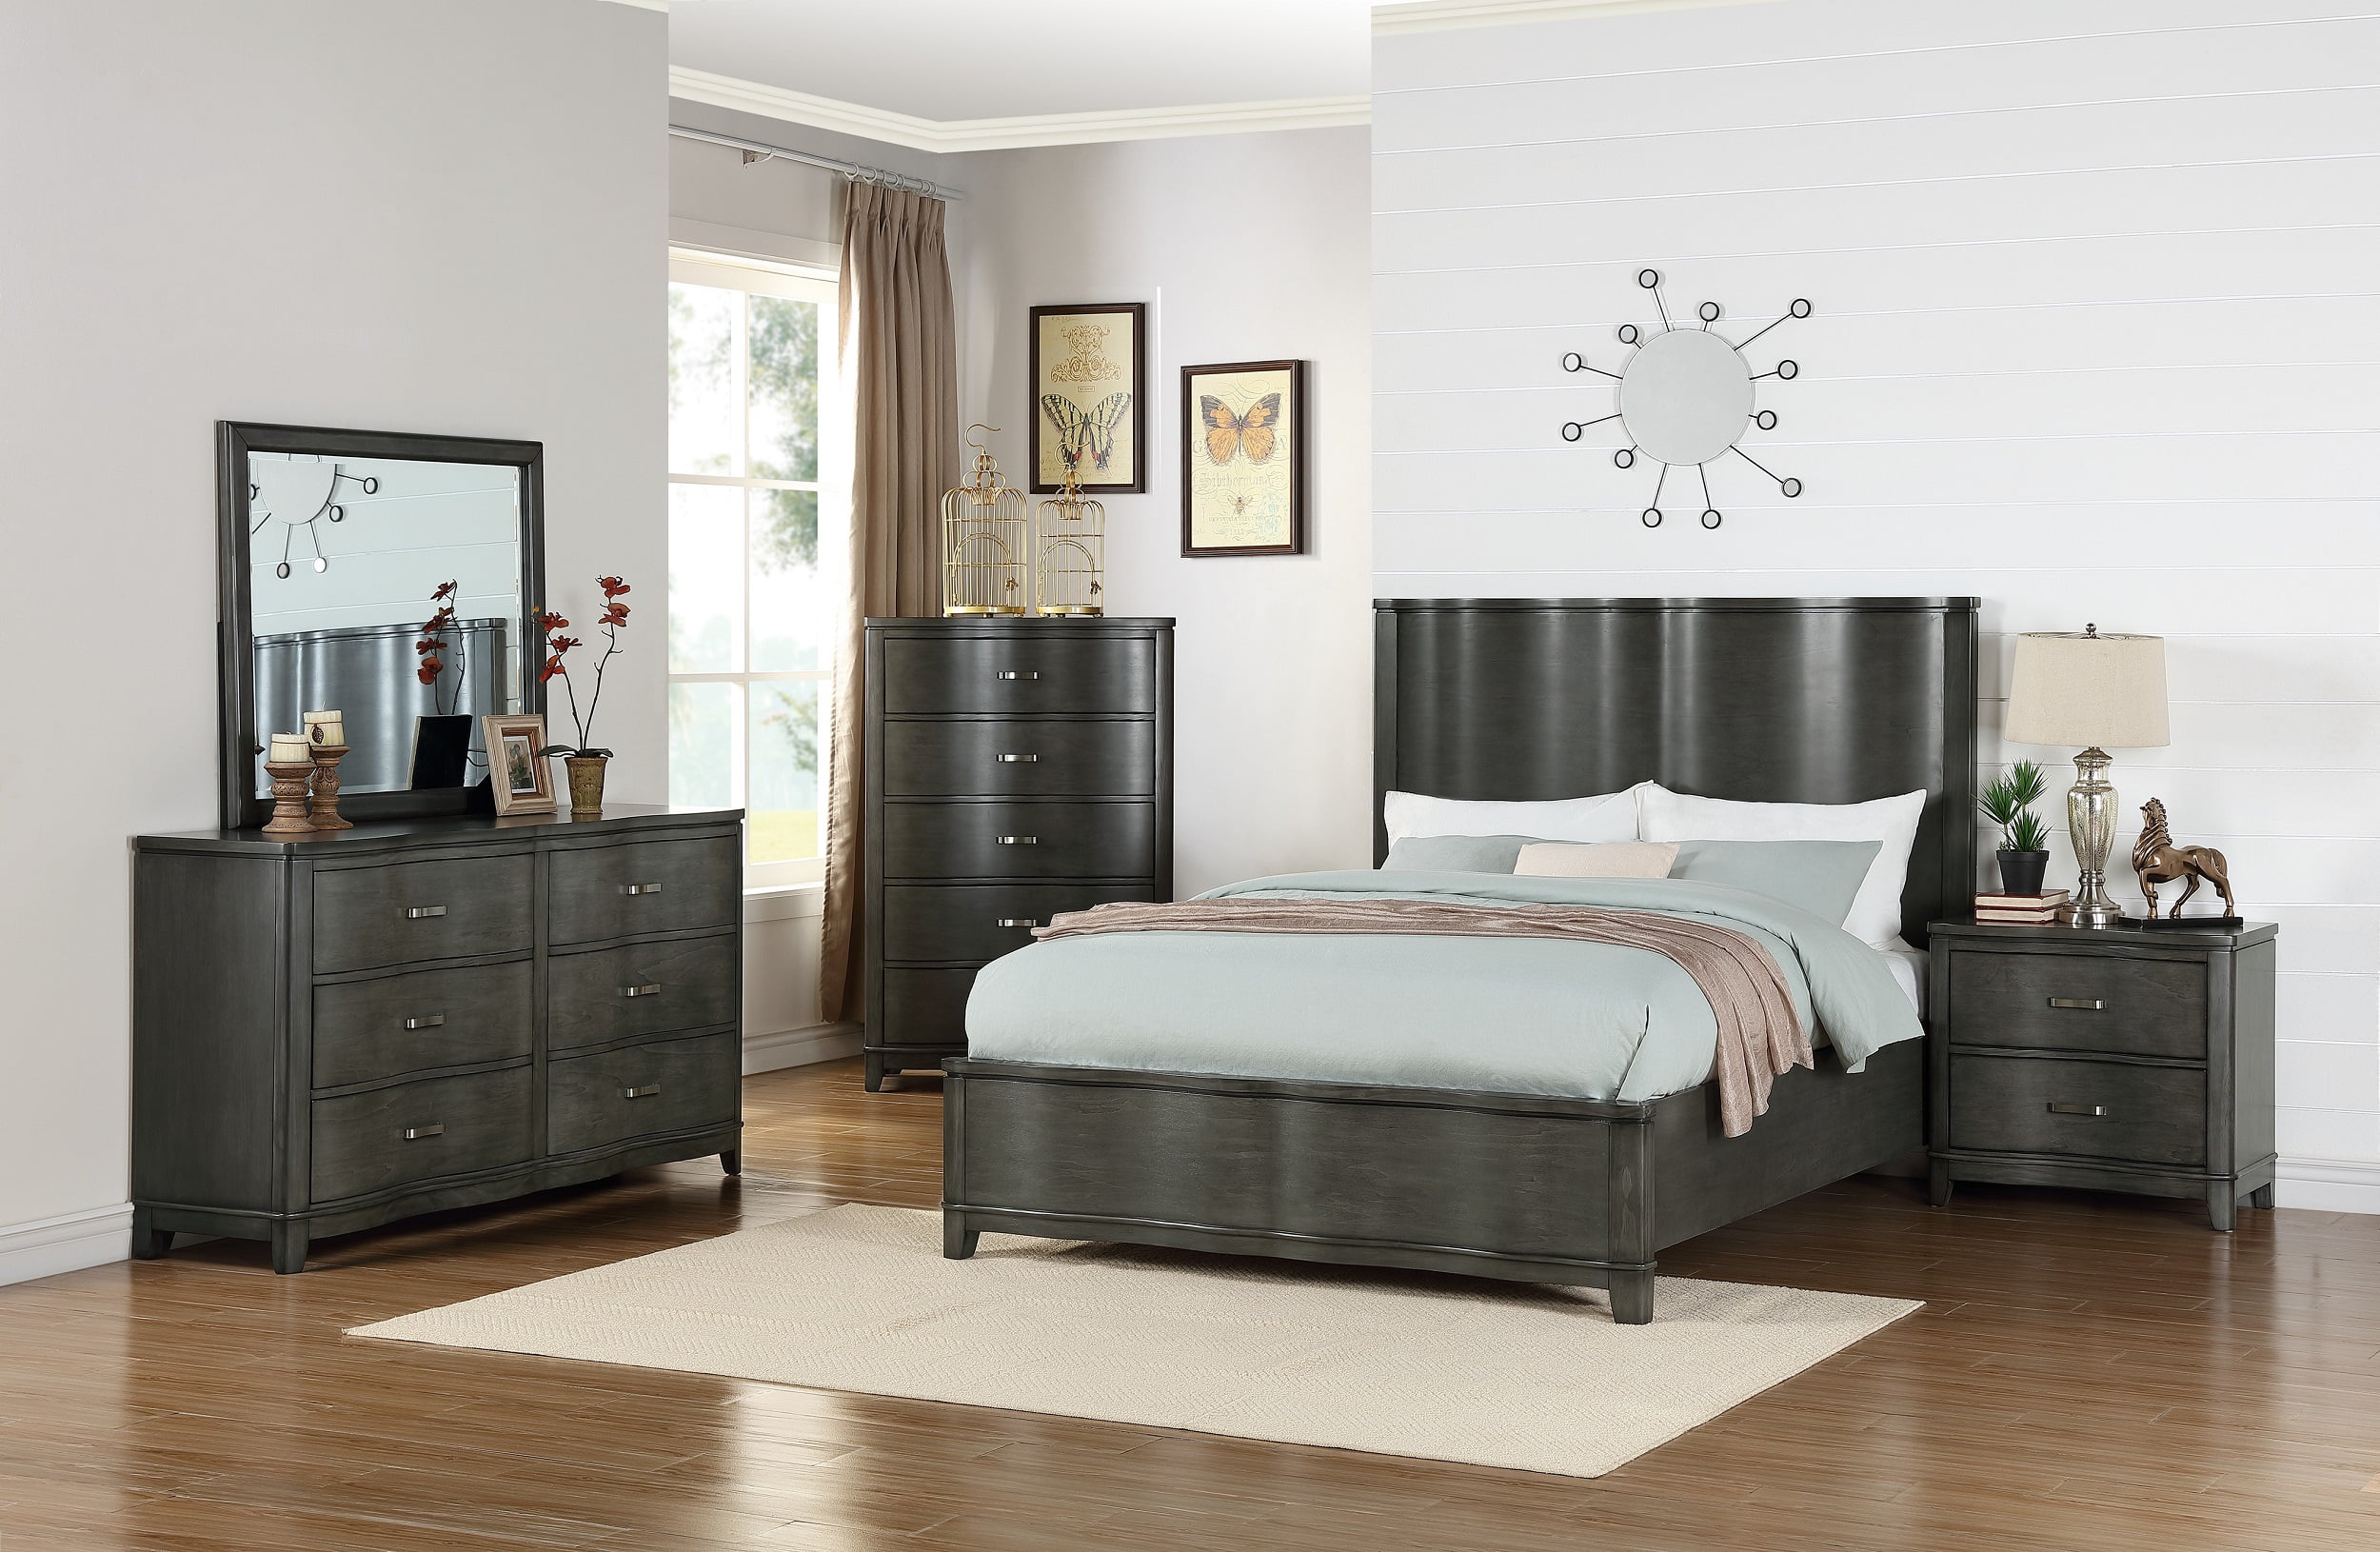 sayler walmart bedroom furniture set